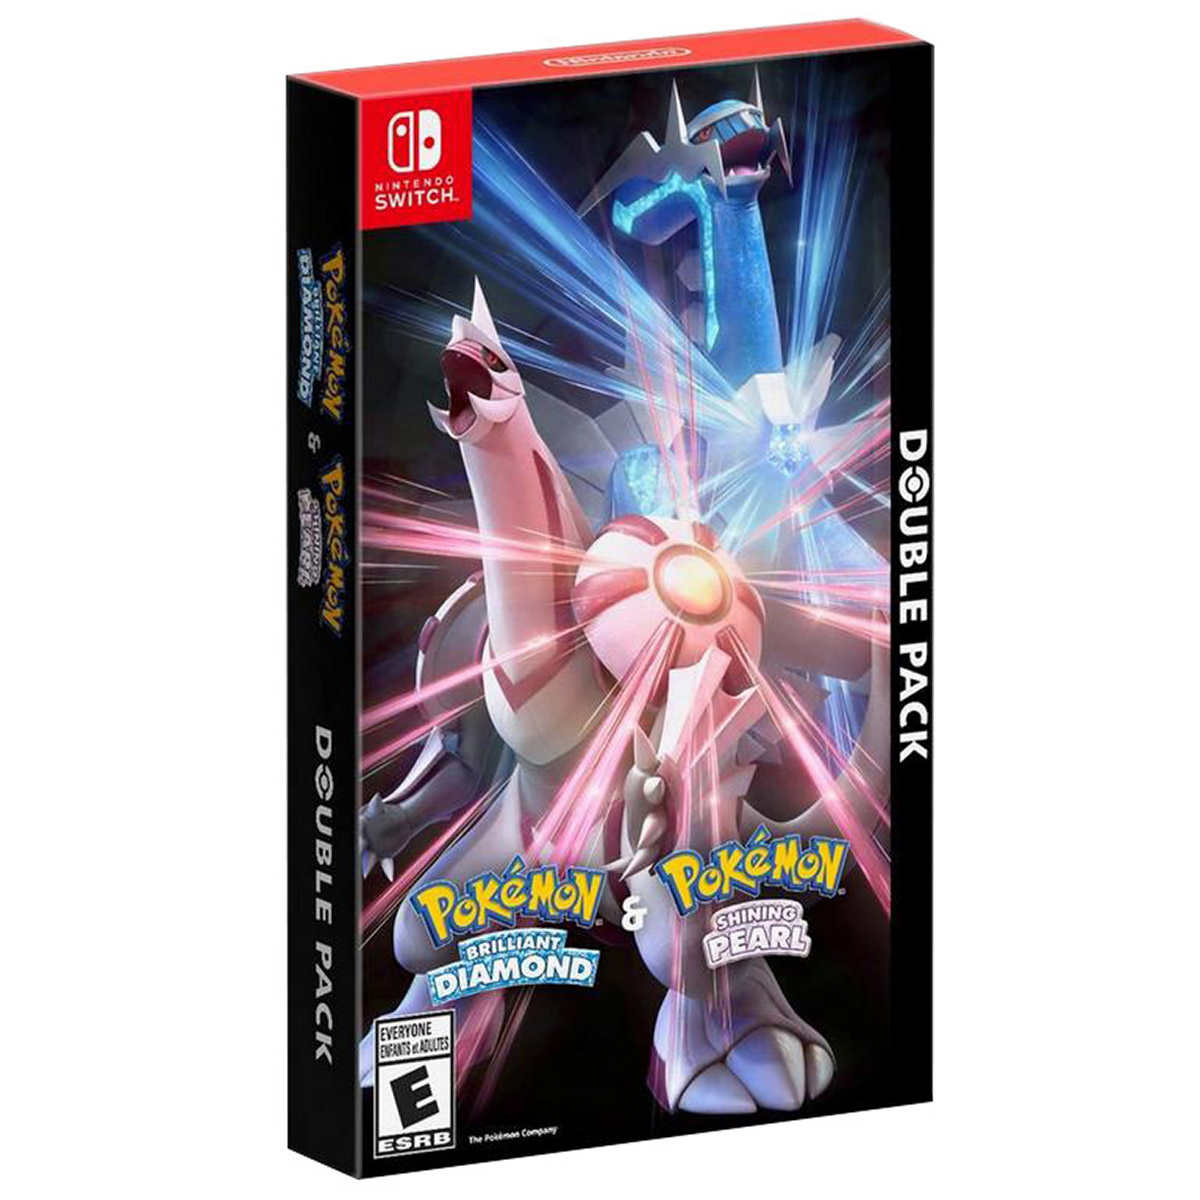 Nintendo Switch Pokemon Brilliant Diamond and Shining Pearl Double Pack $101.98 shipped @ Costco